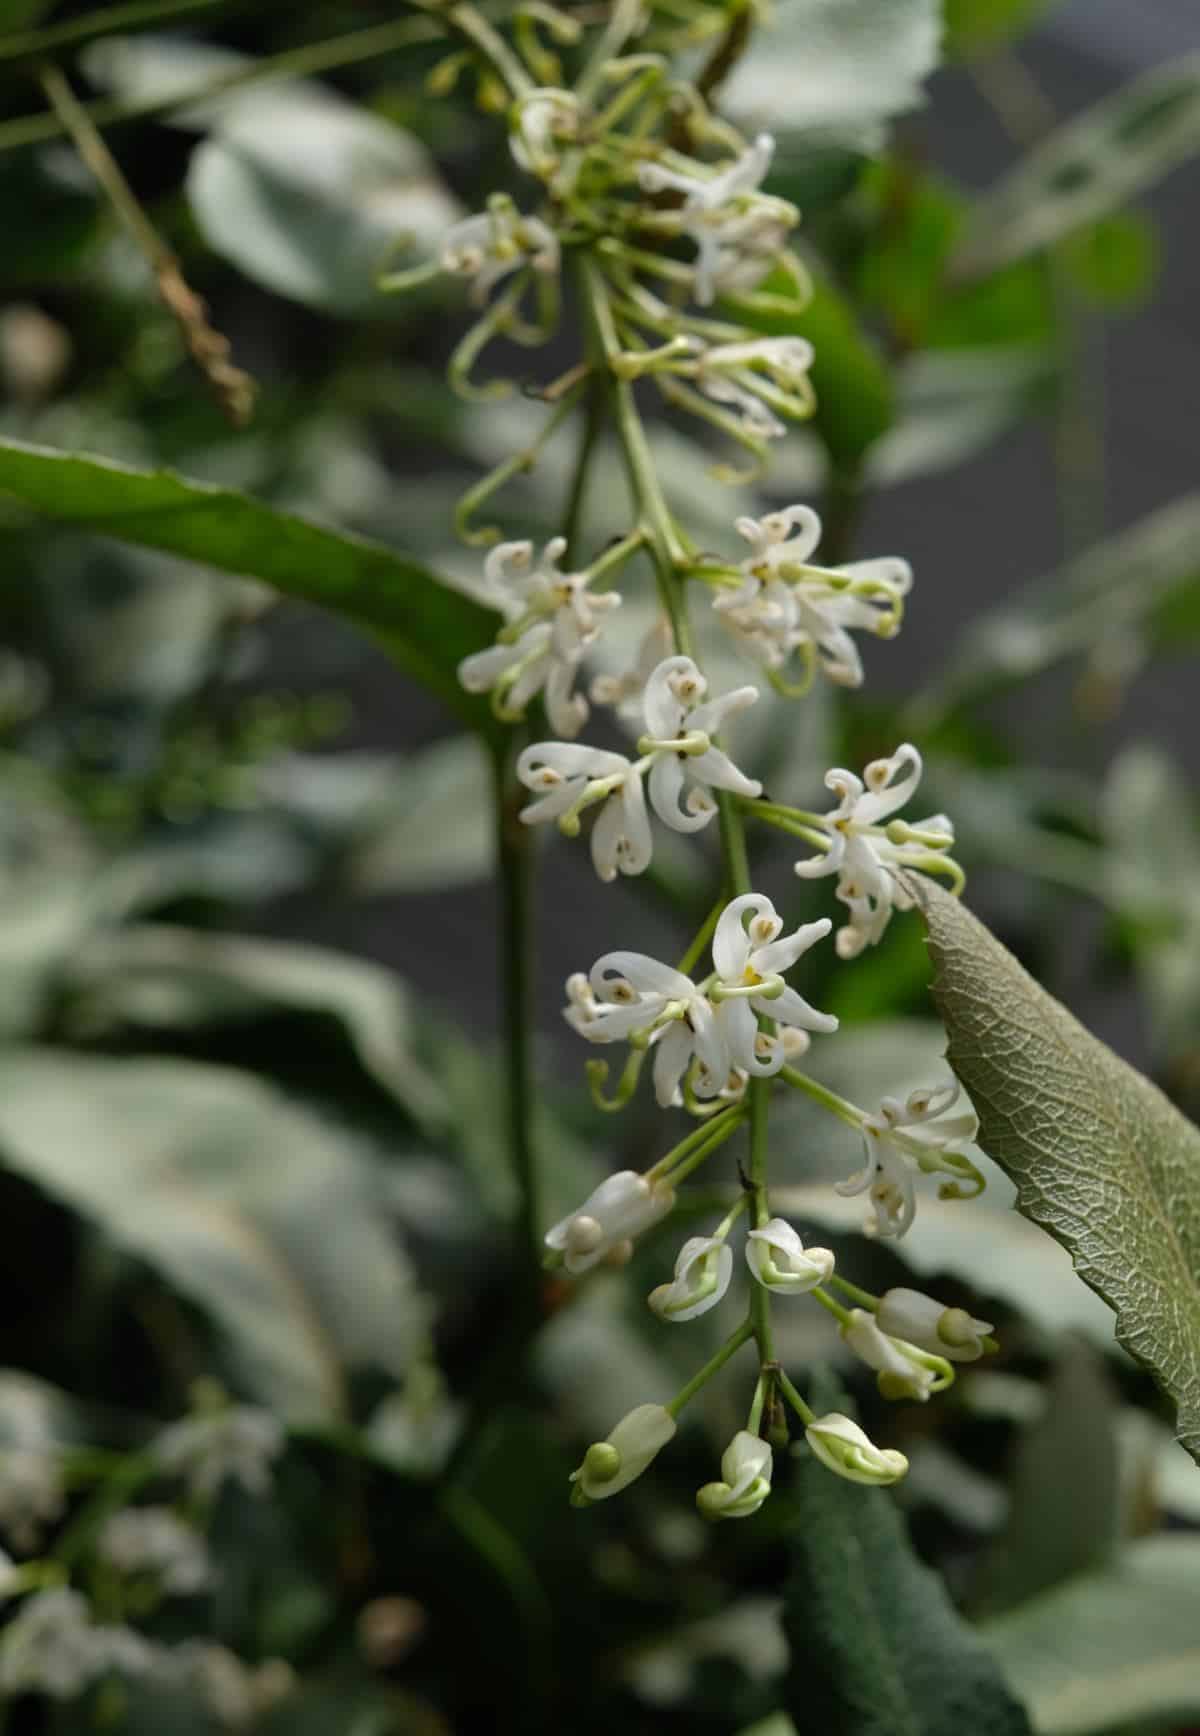 A lomatia shrub flower.